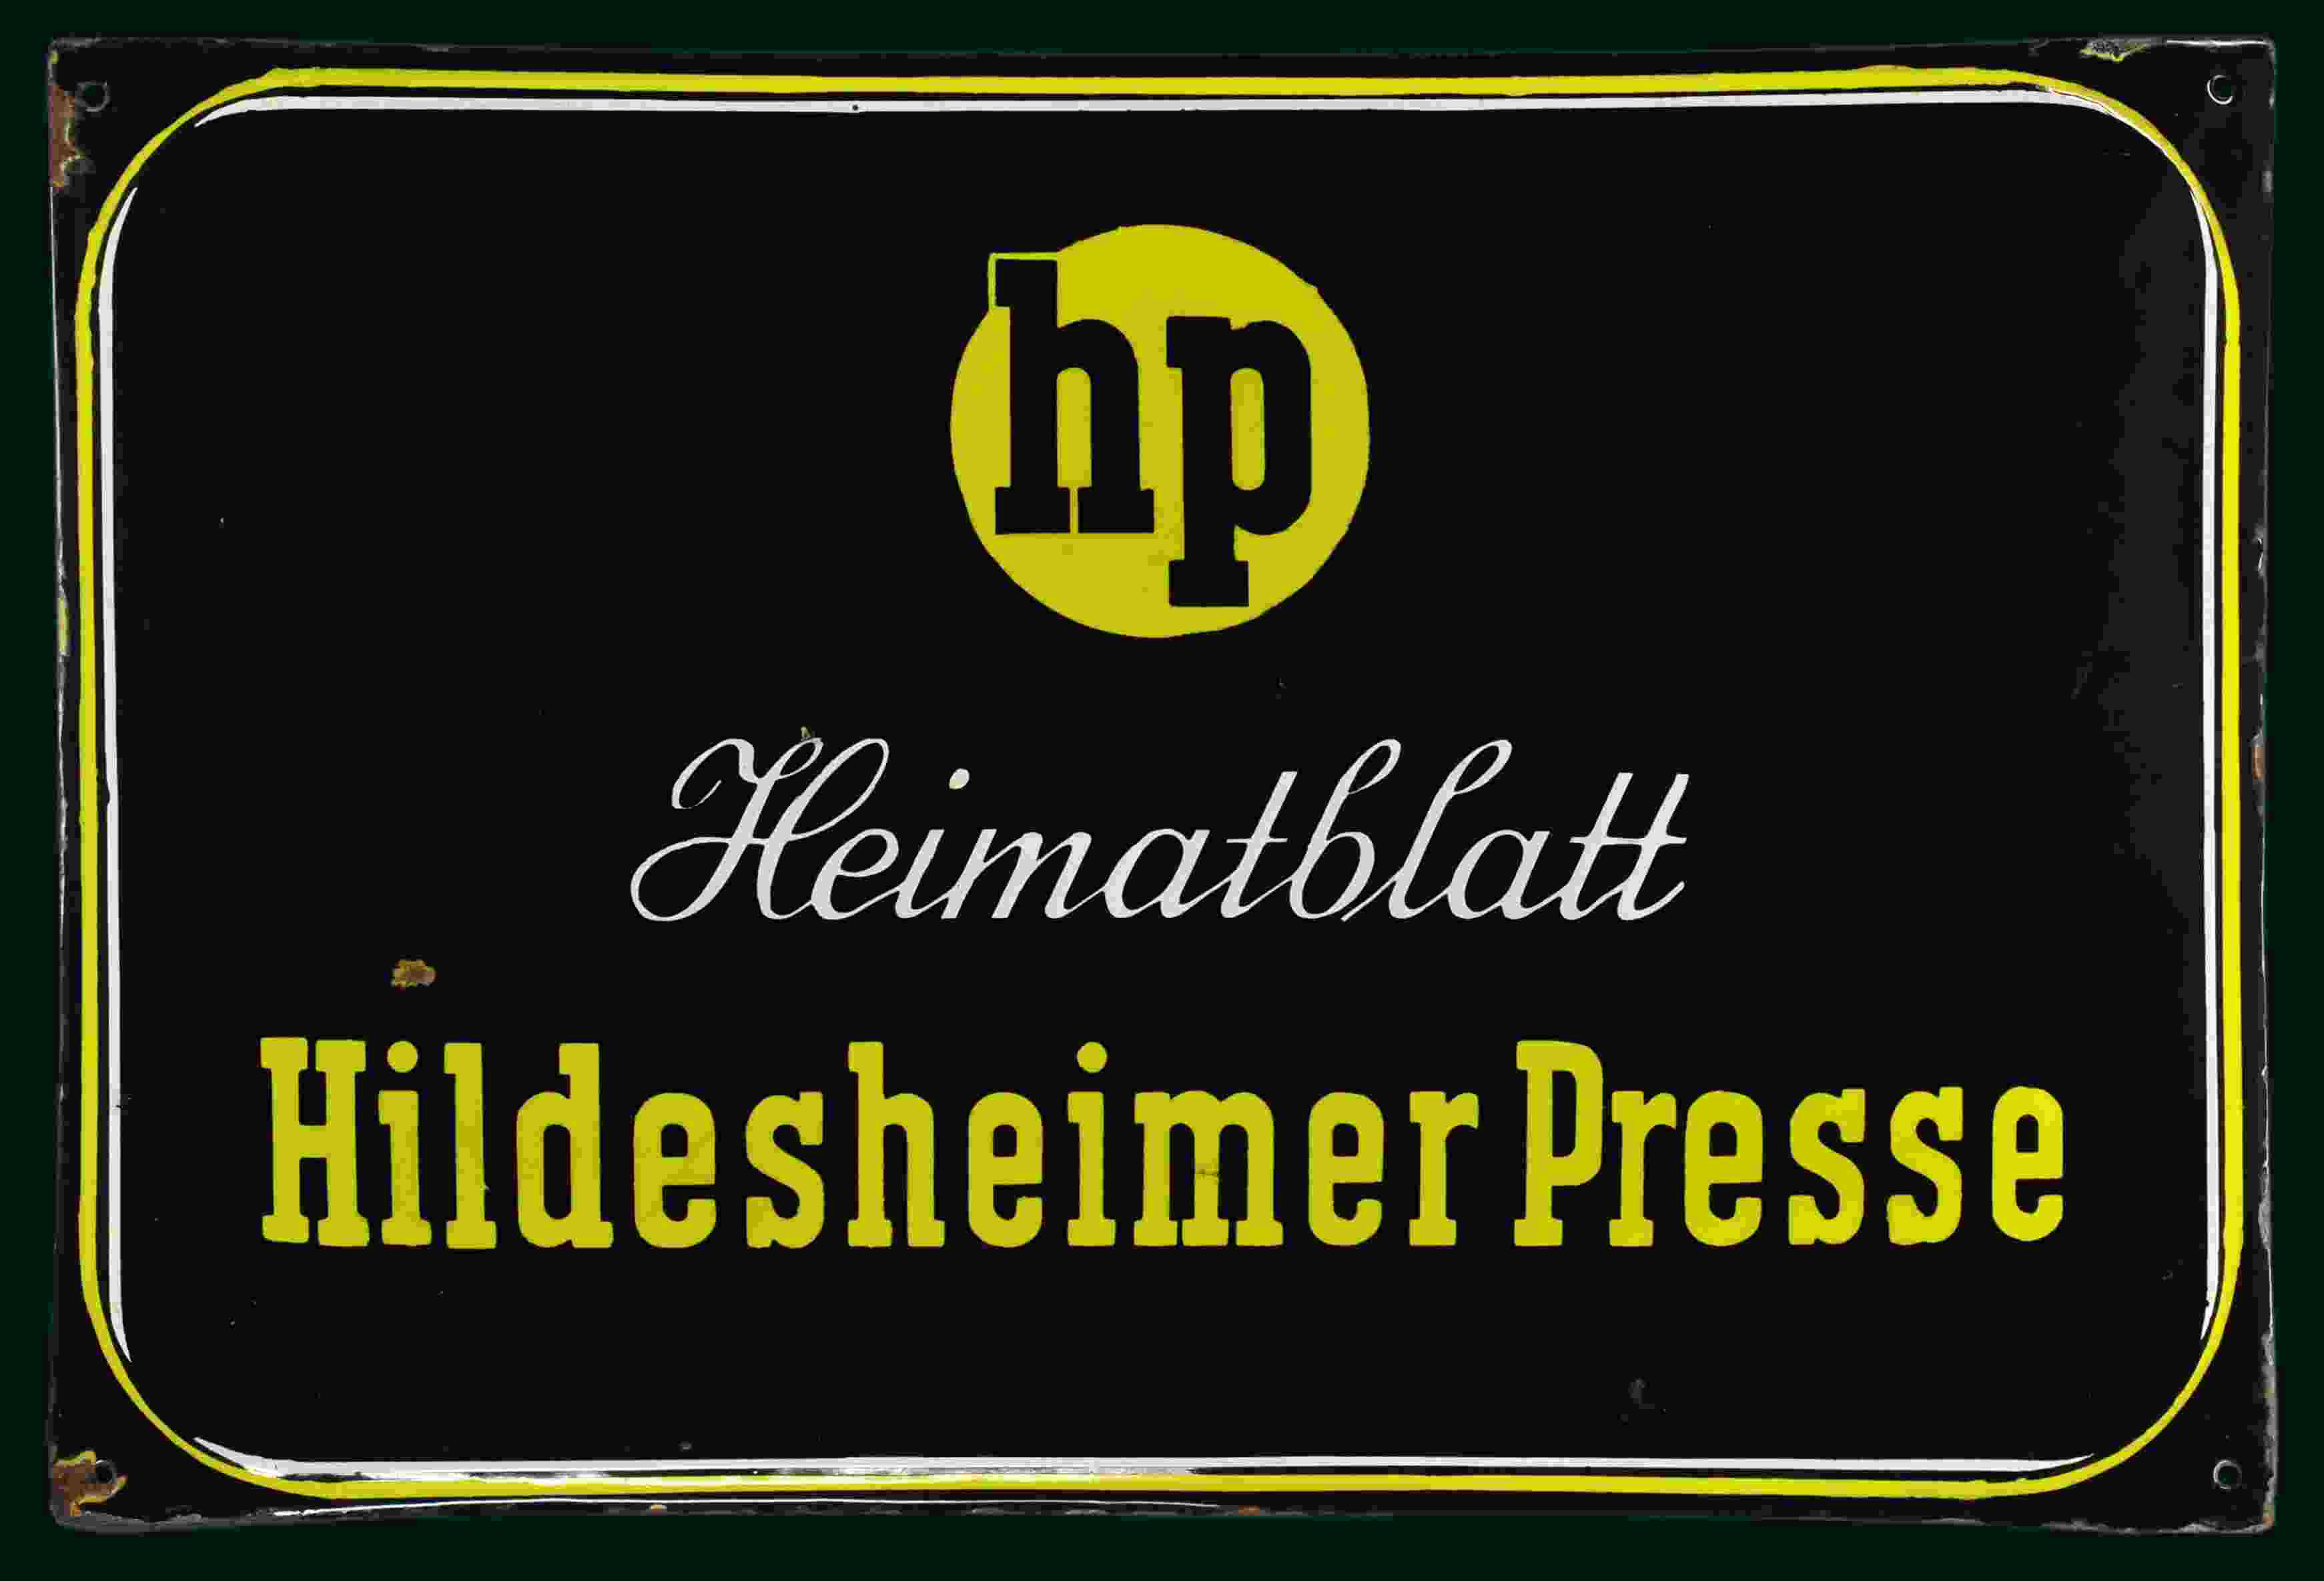 Hildesheimer Presse HP Heimatblatt 